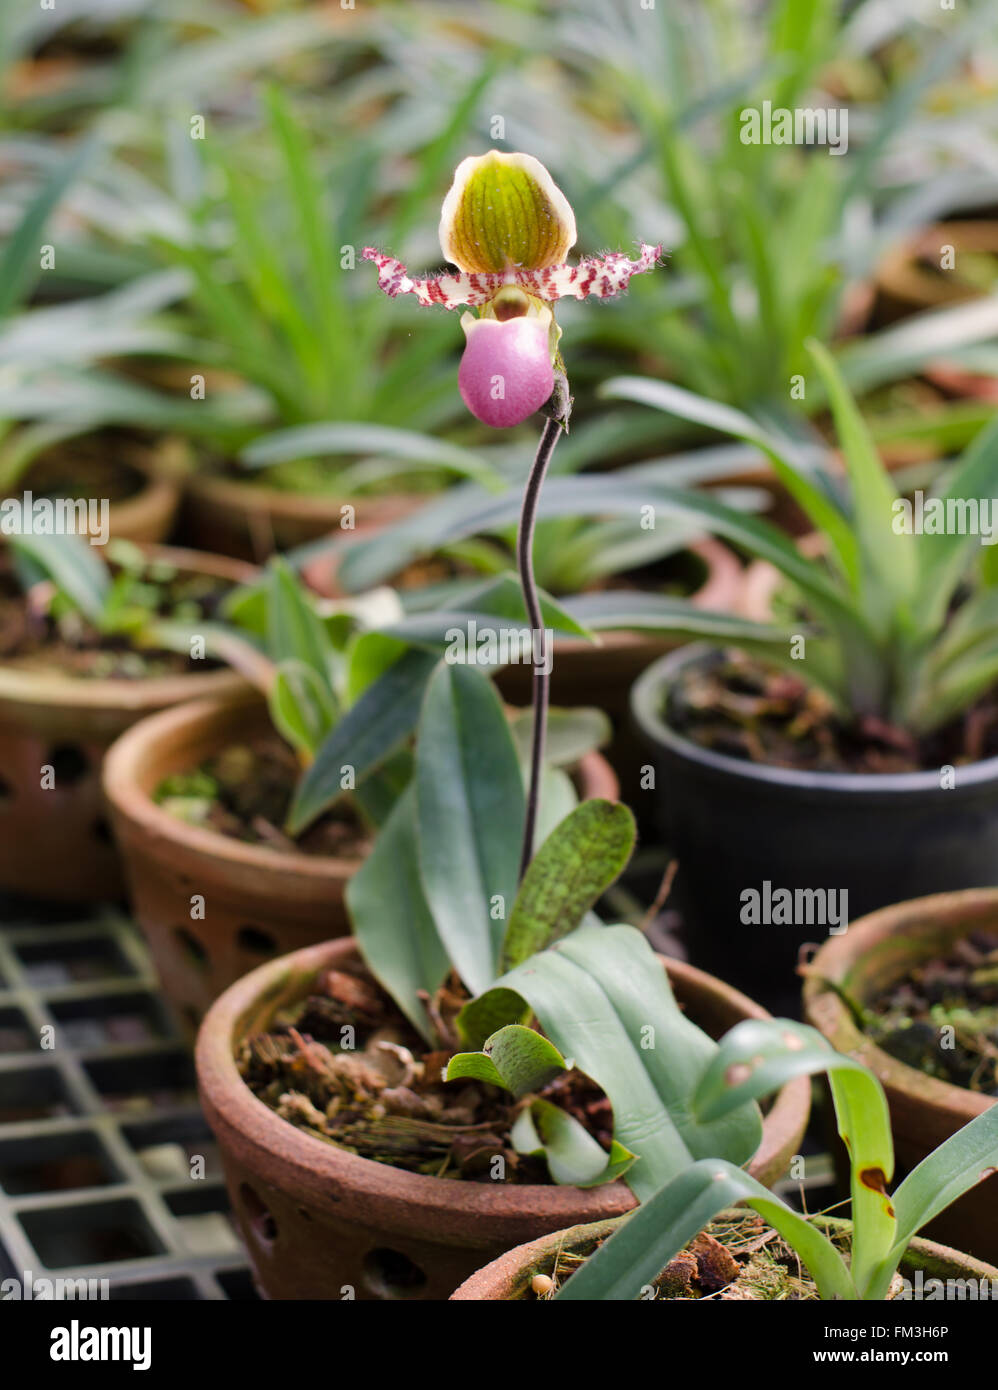 Paphiopedilum flower Stock Photo